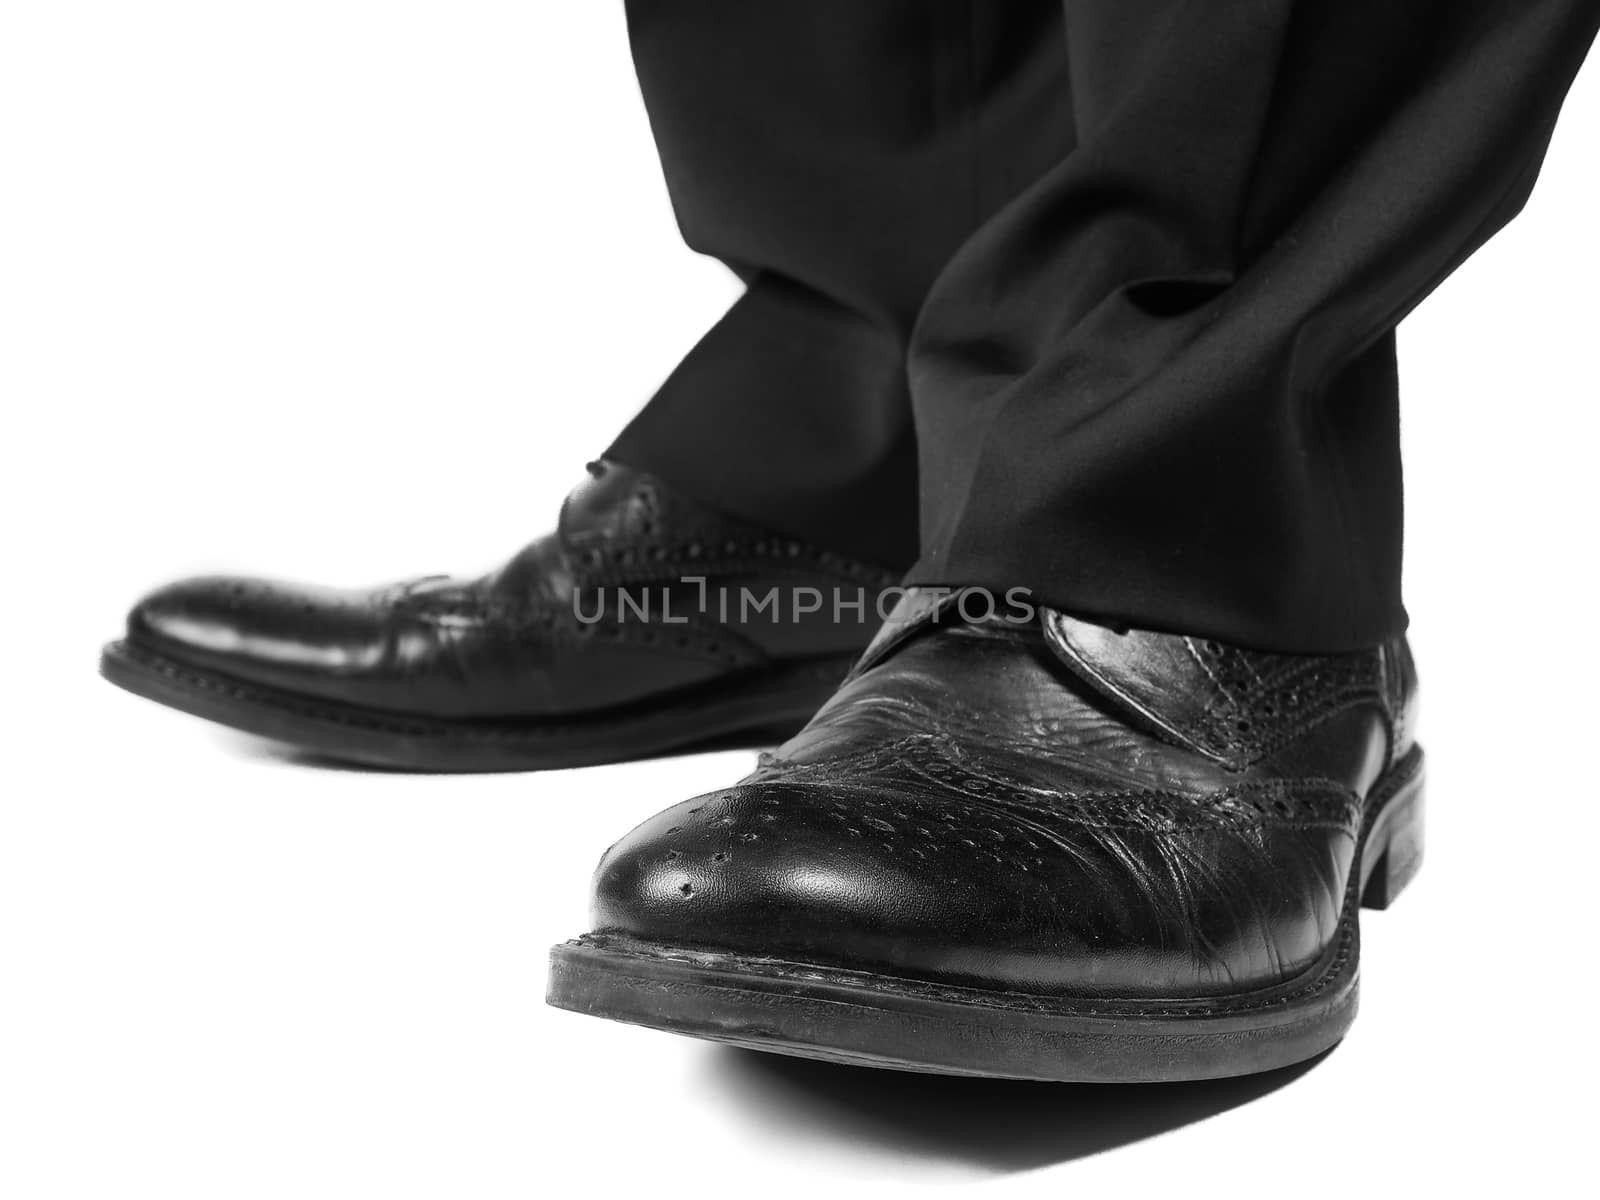 Masculine suit wearing shiny black leather shoes towards white